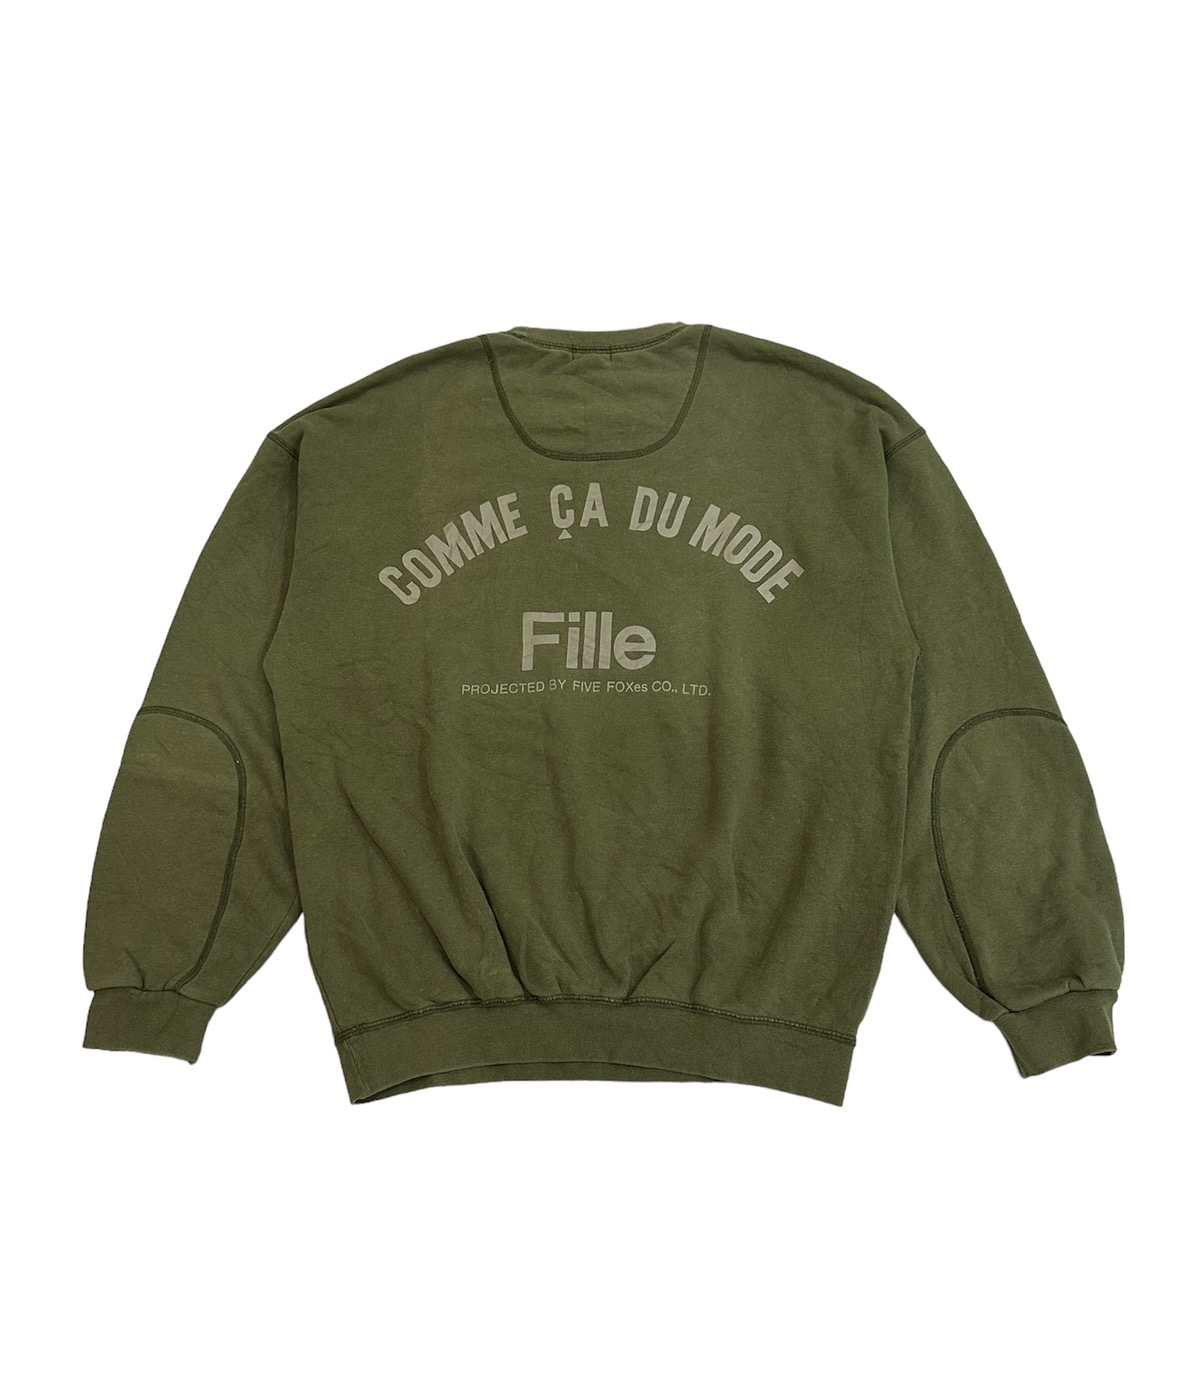 Other Designers Comme Ca Ism - Commes Ca Du Mode Sweatshirt